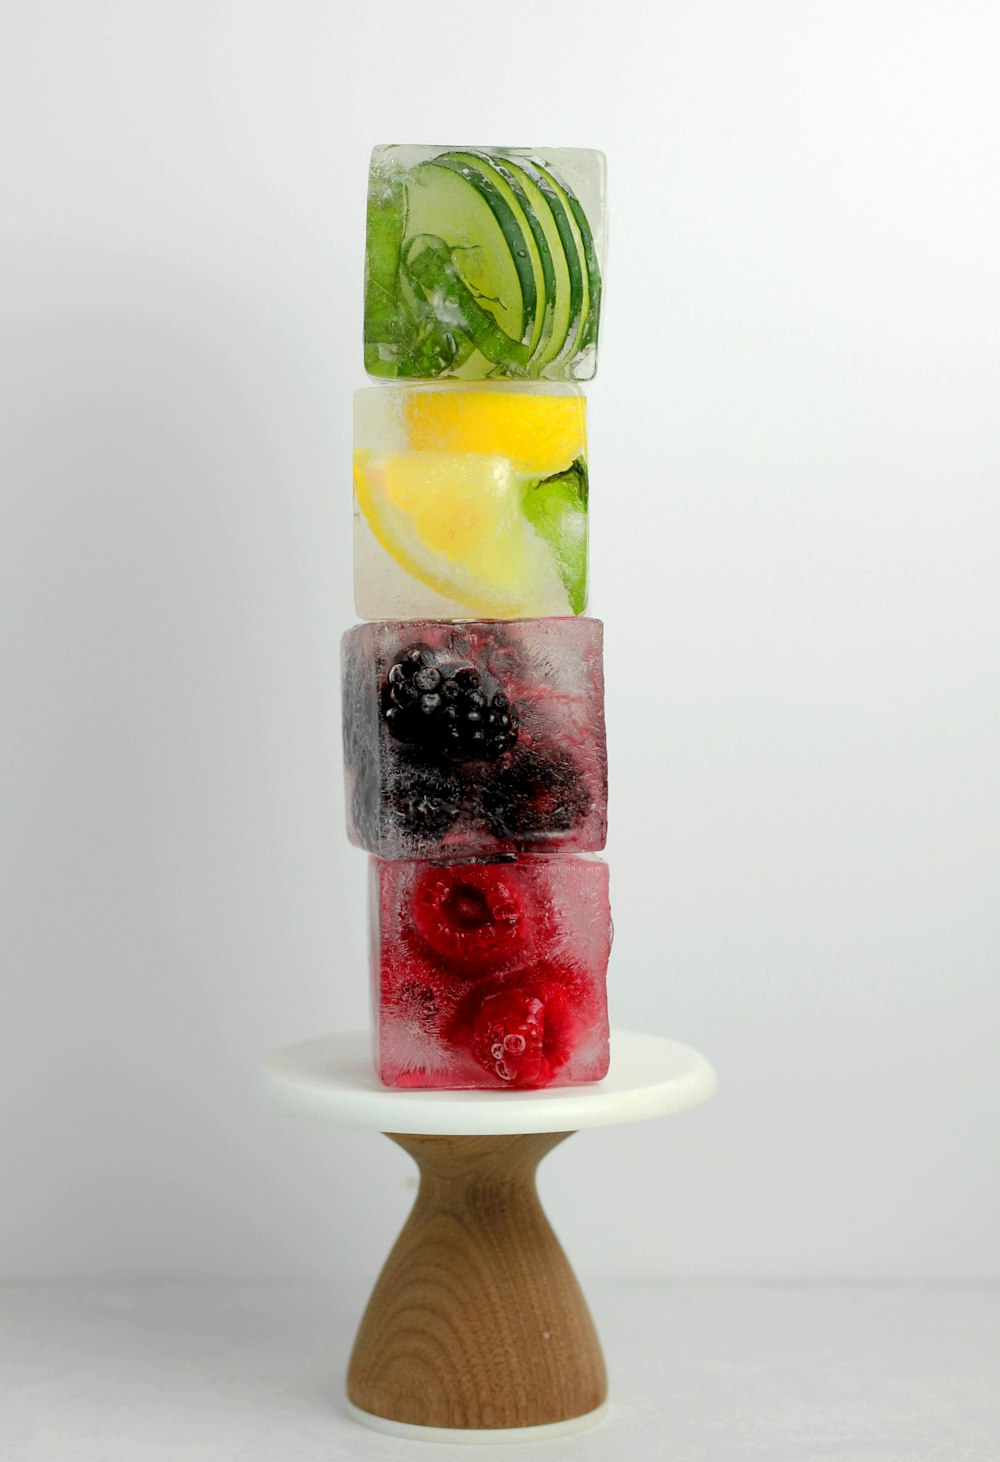 cubitos de hielo apilados de diferentes sabores